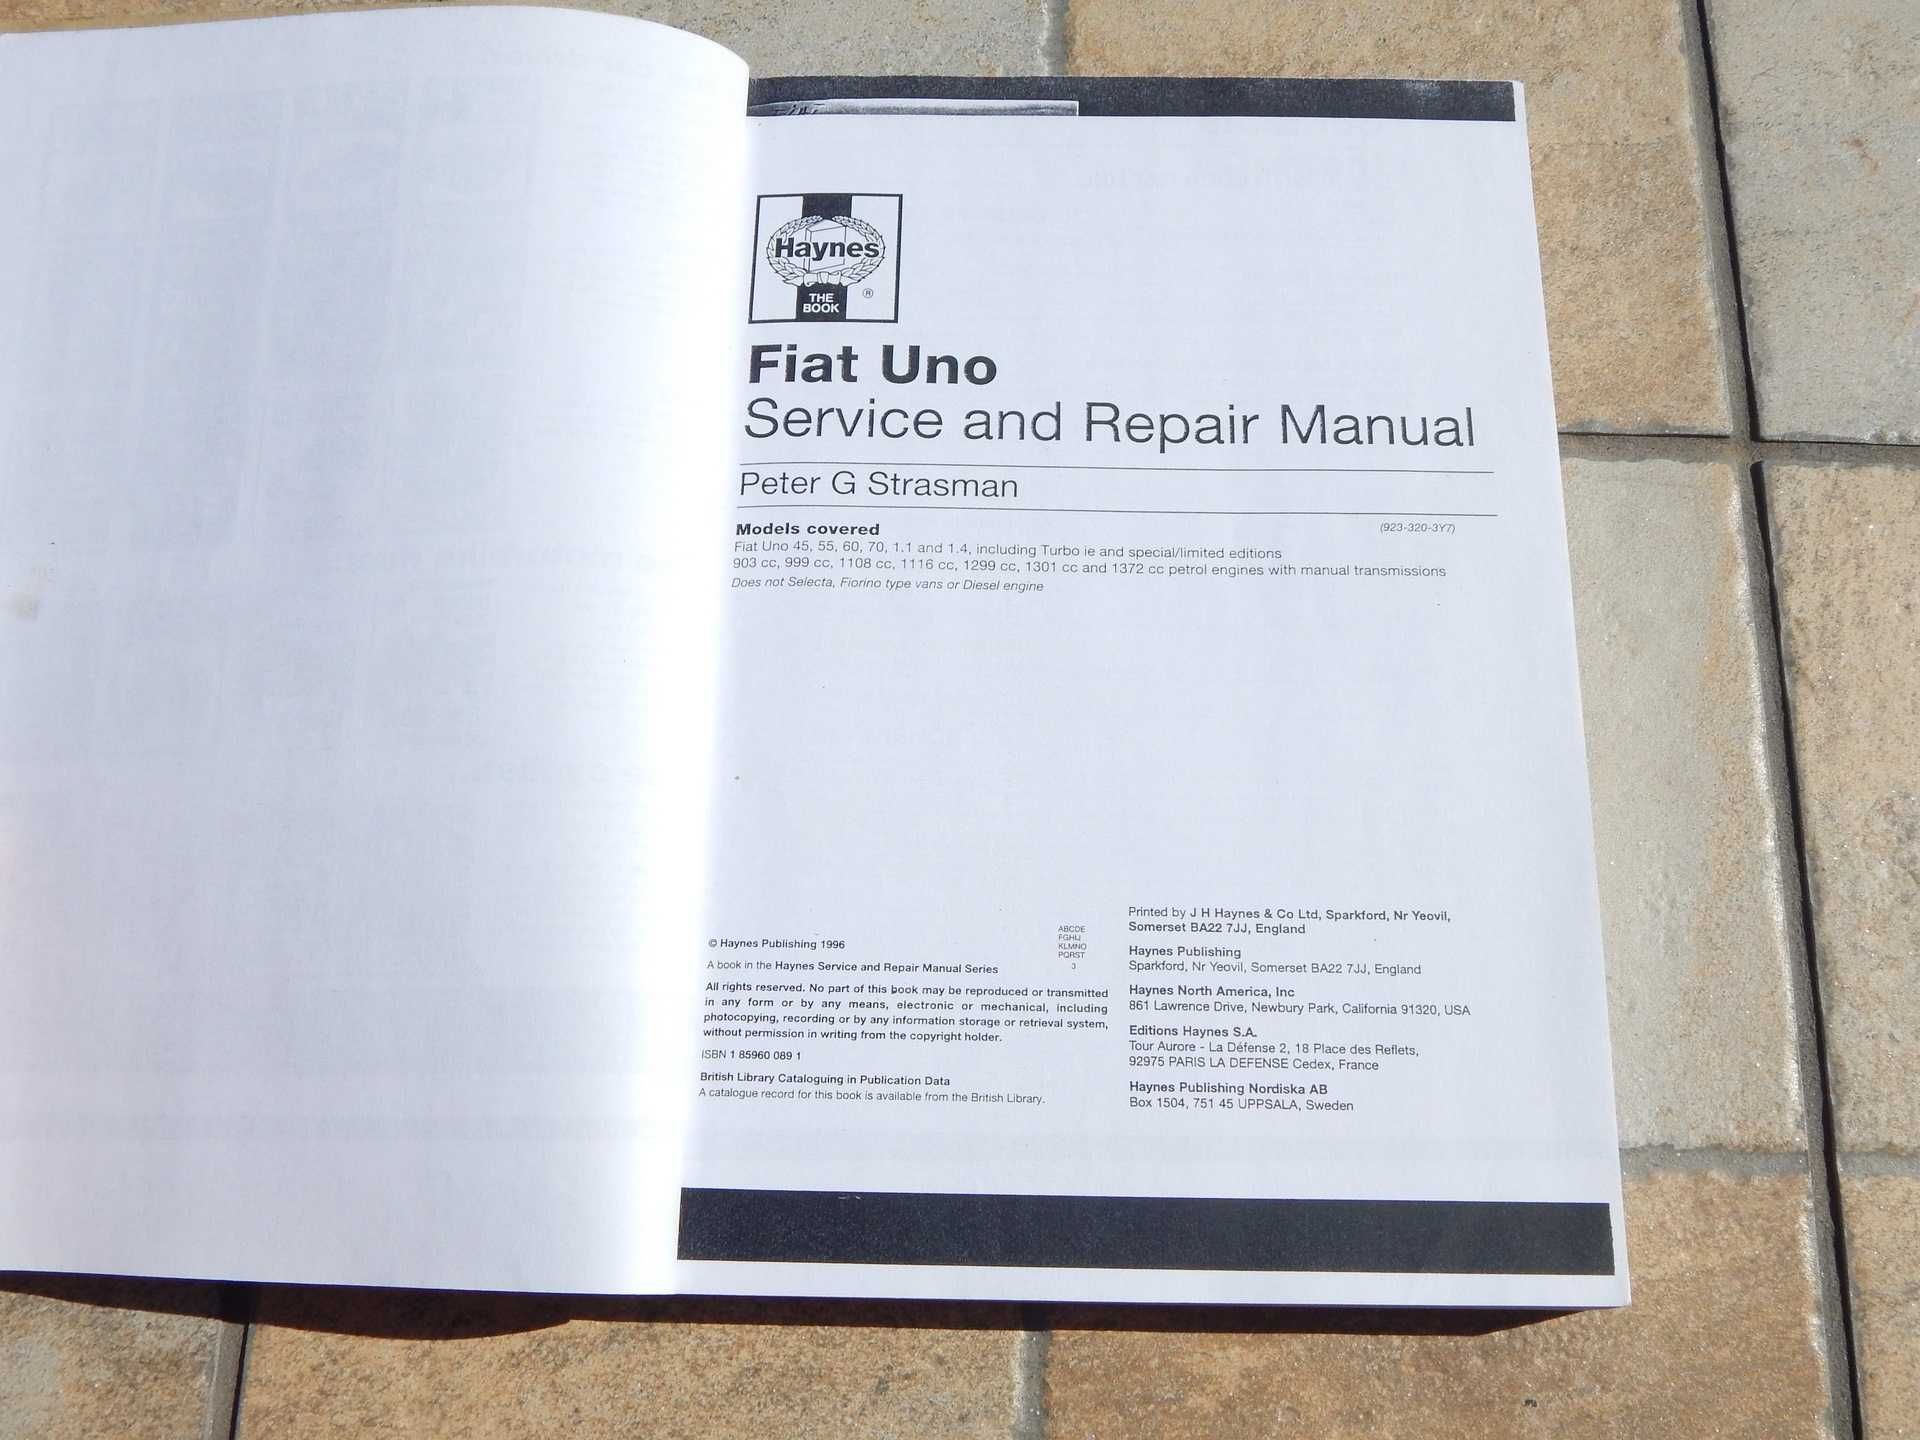 Manual service si reparatii FIAT Uno 1983-1995 (xerox Haynes)